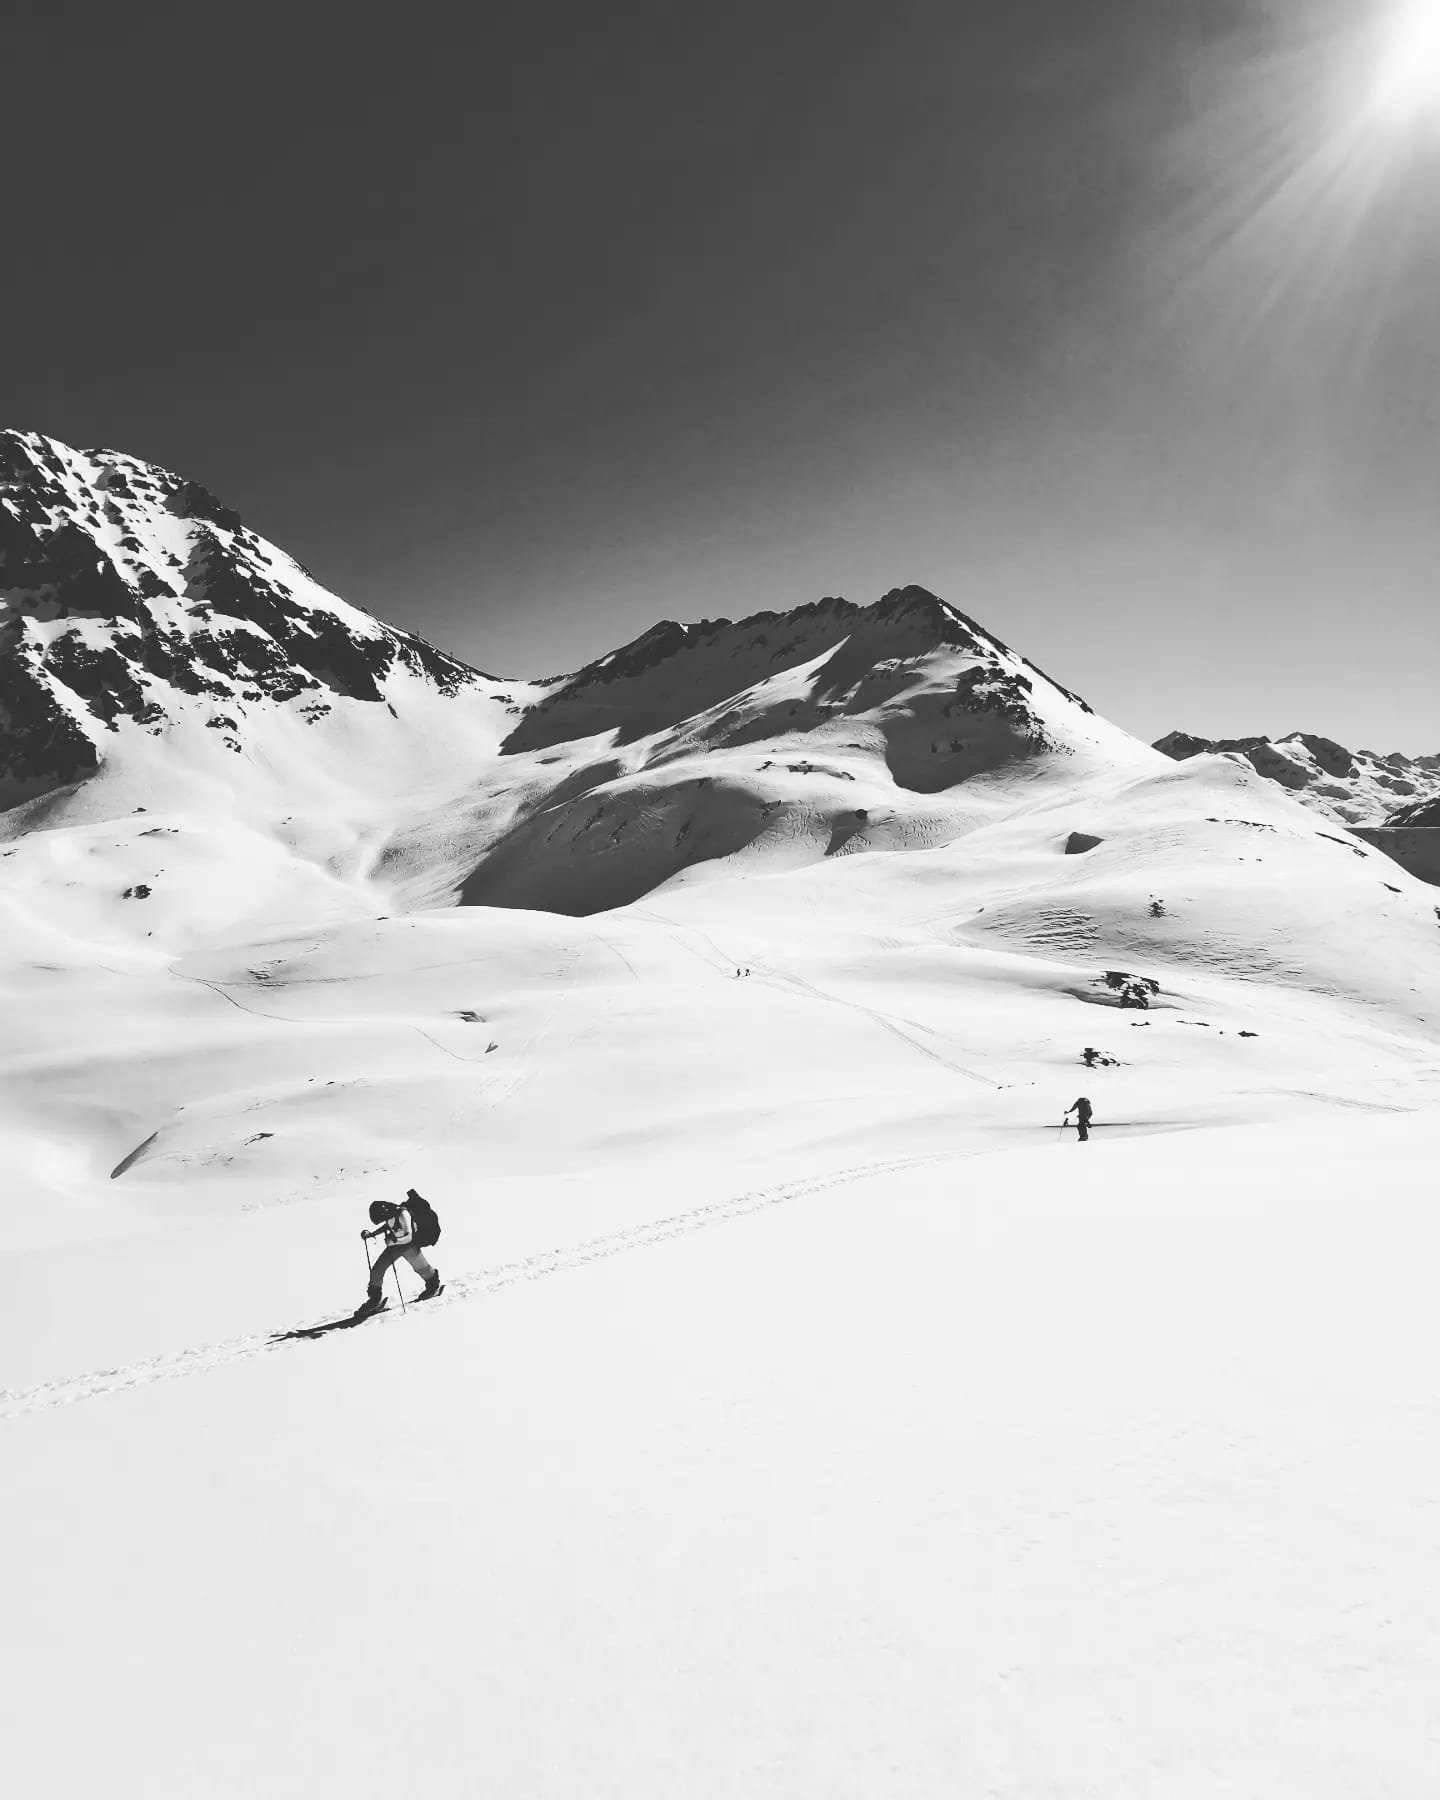 Skiguide Arlberg - Guiding - Freeriden Skitouren - Lech/Zürs, Stuben, Warth/Schröcken, St.Anton